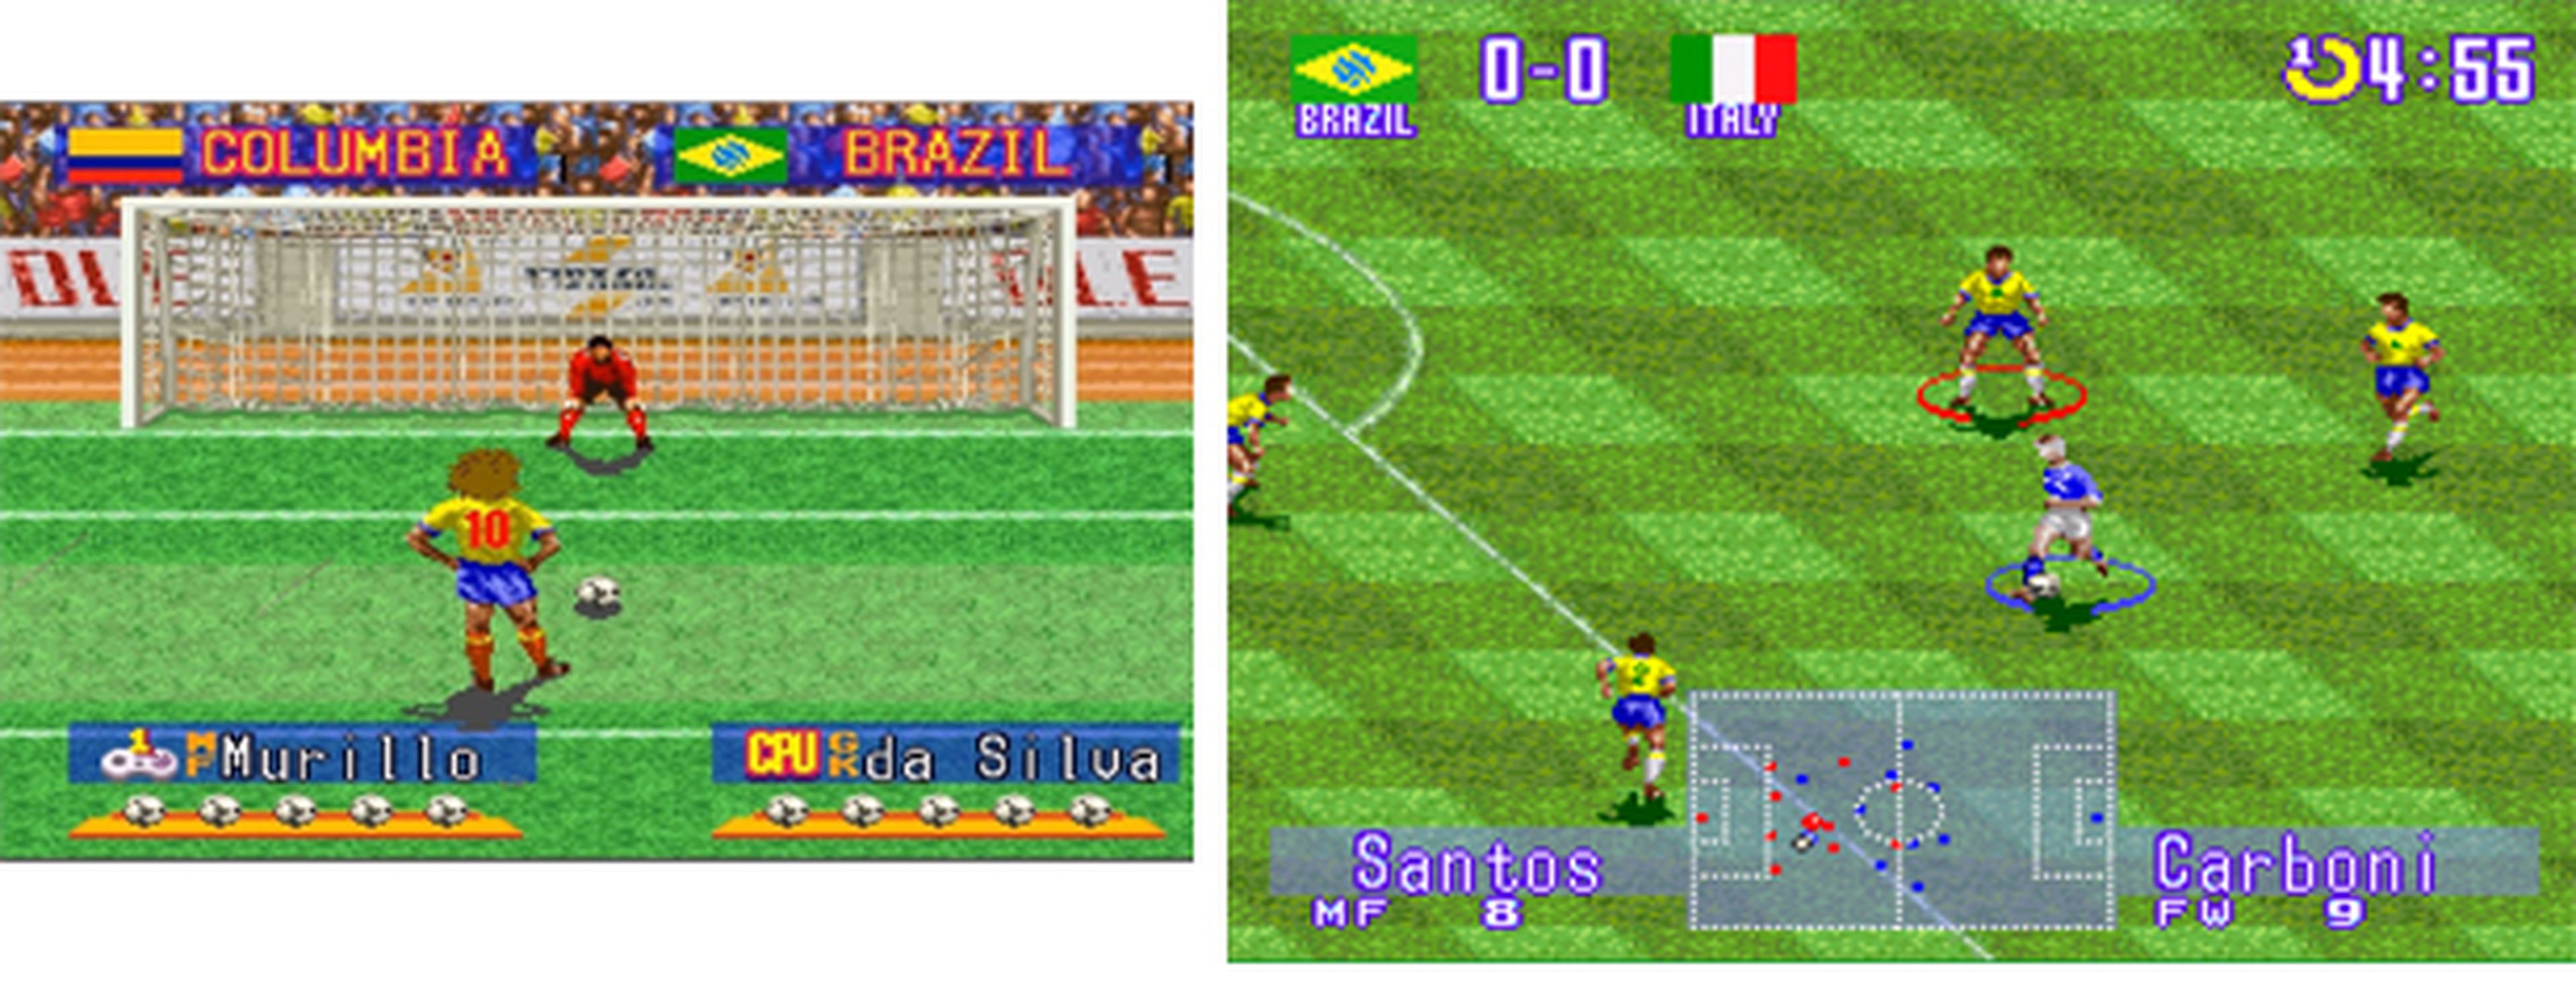 Hobby Consolas, hace 20 años: International Superstar Soccer Deluxe